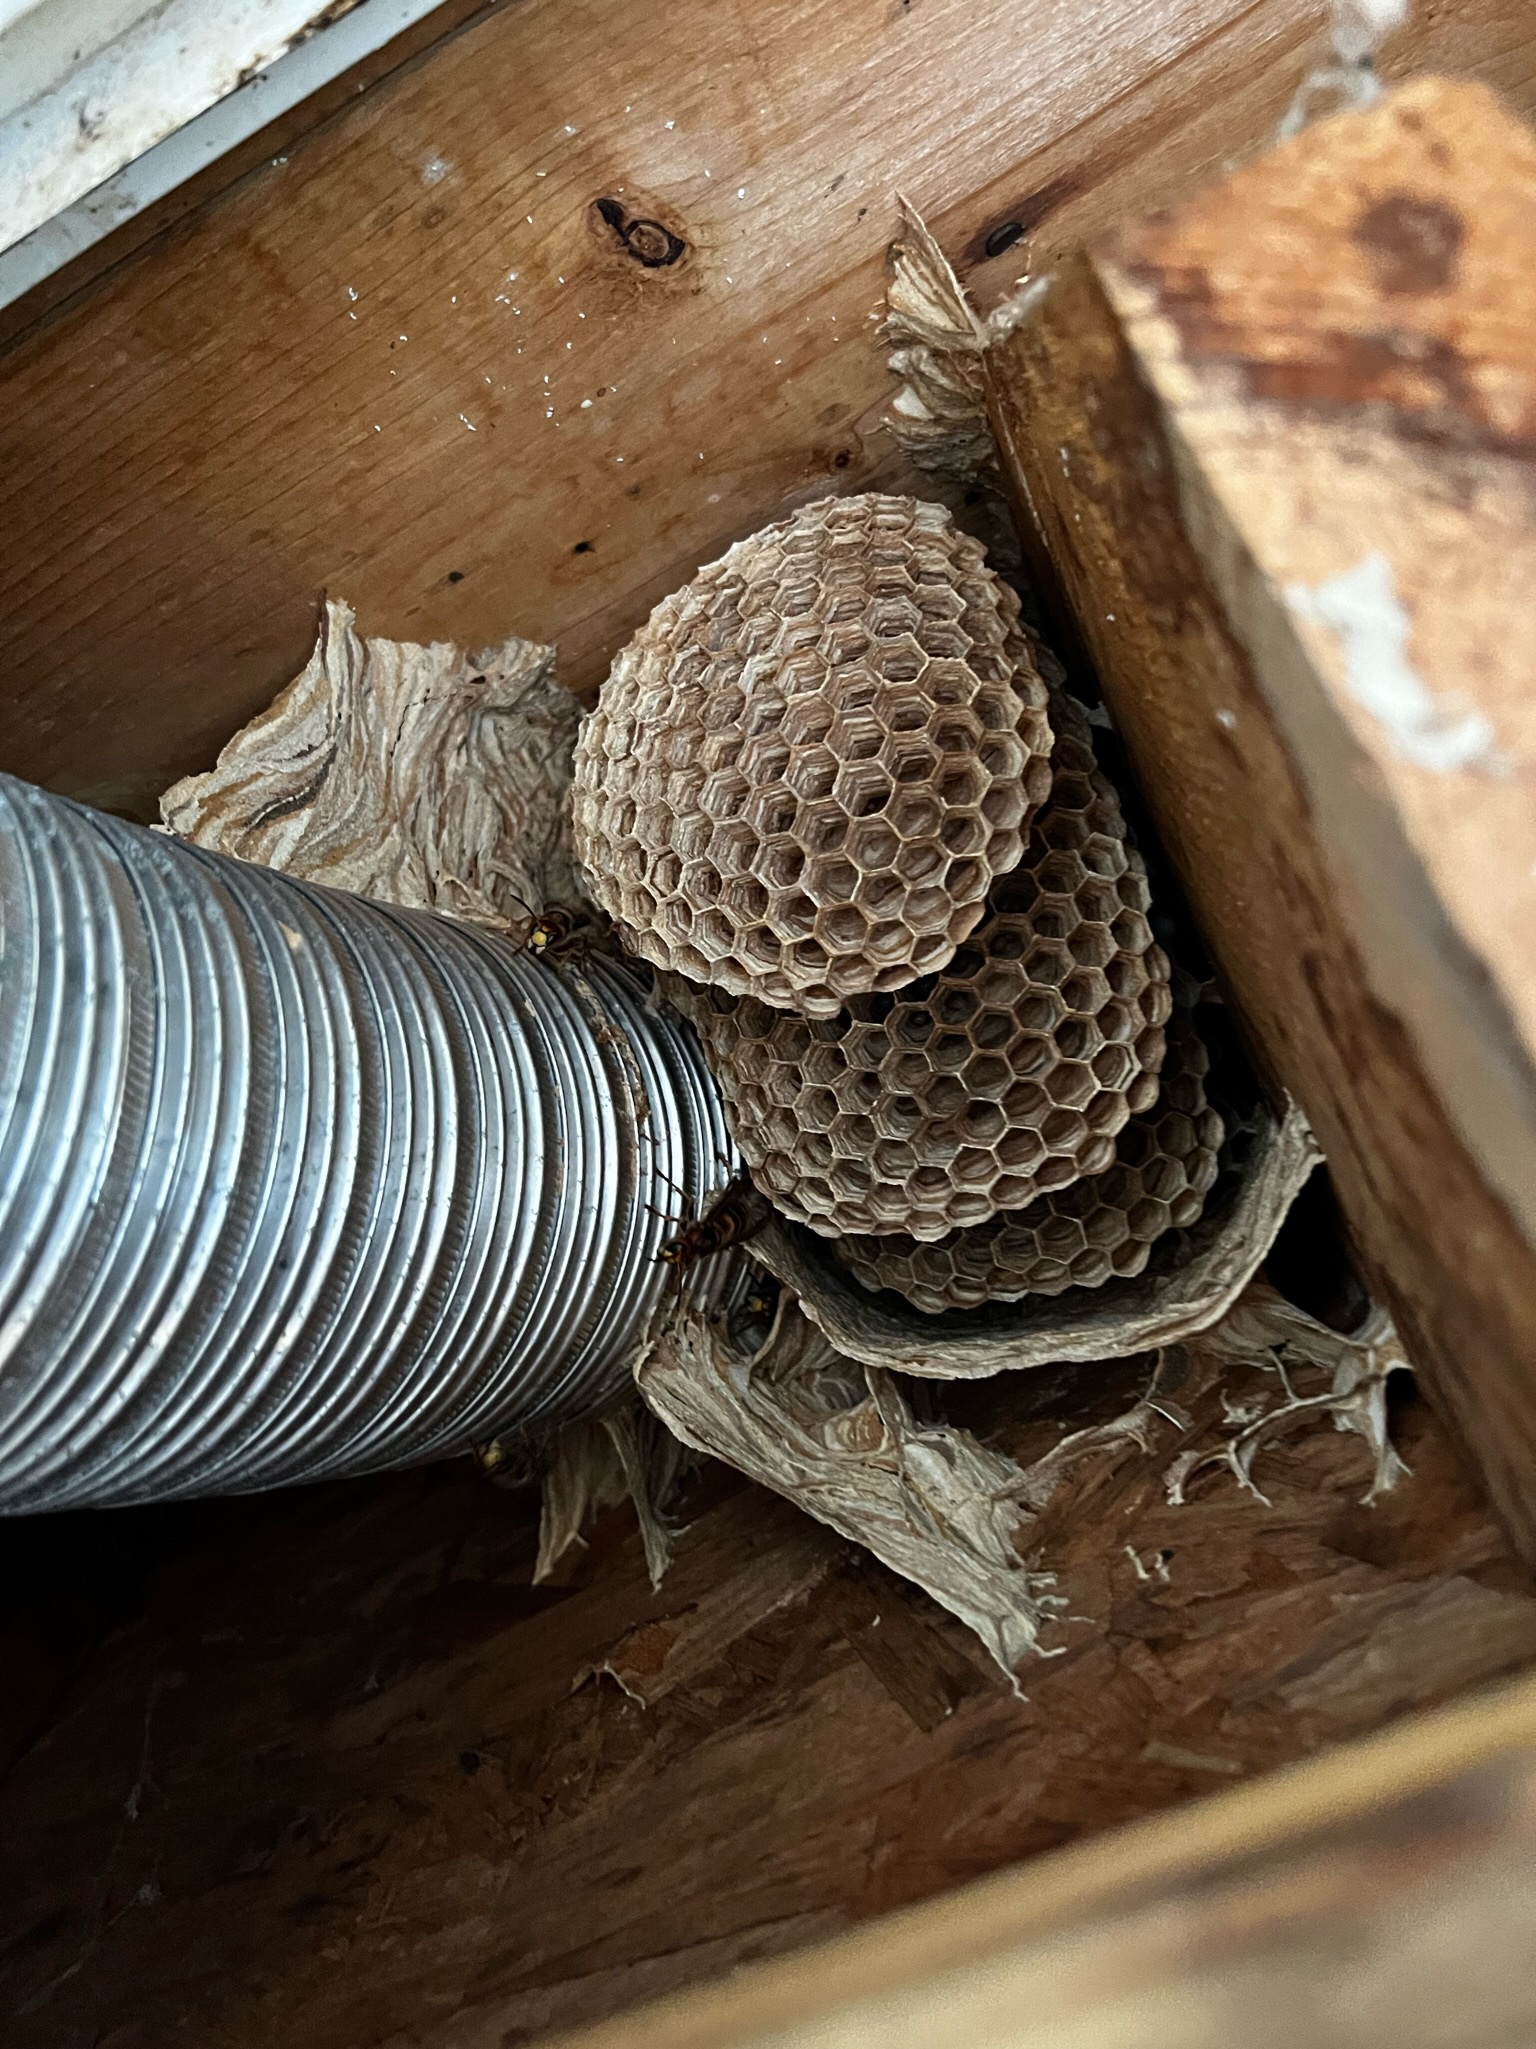 european hornets - big canoe hive removal